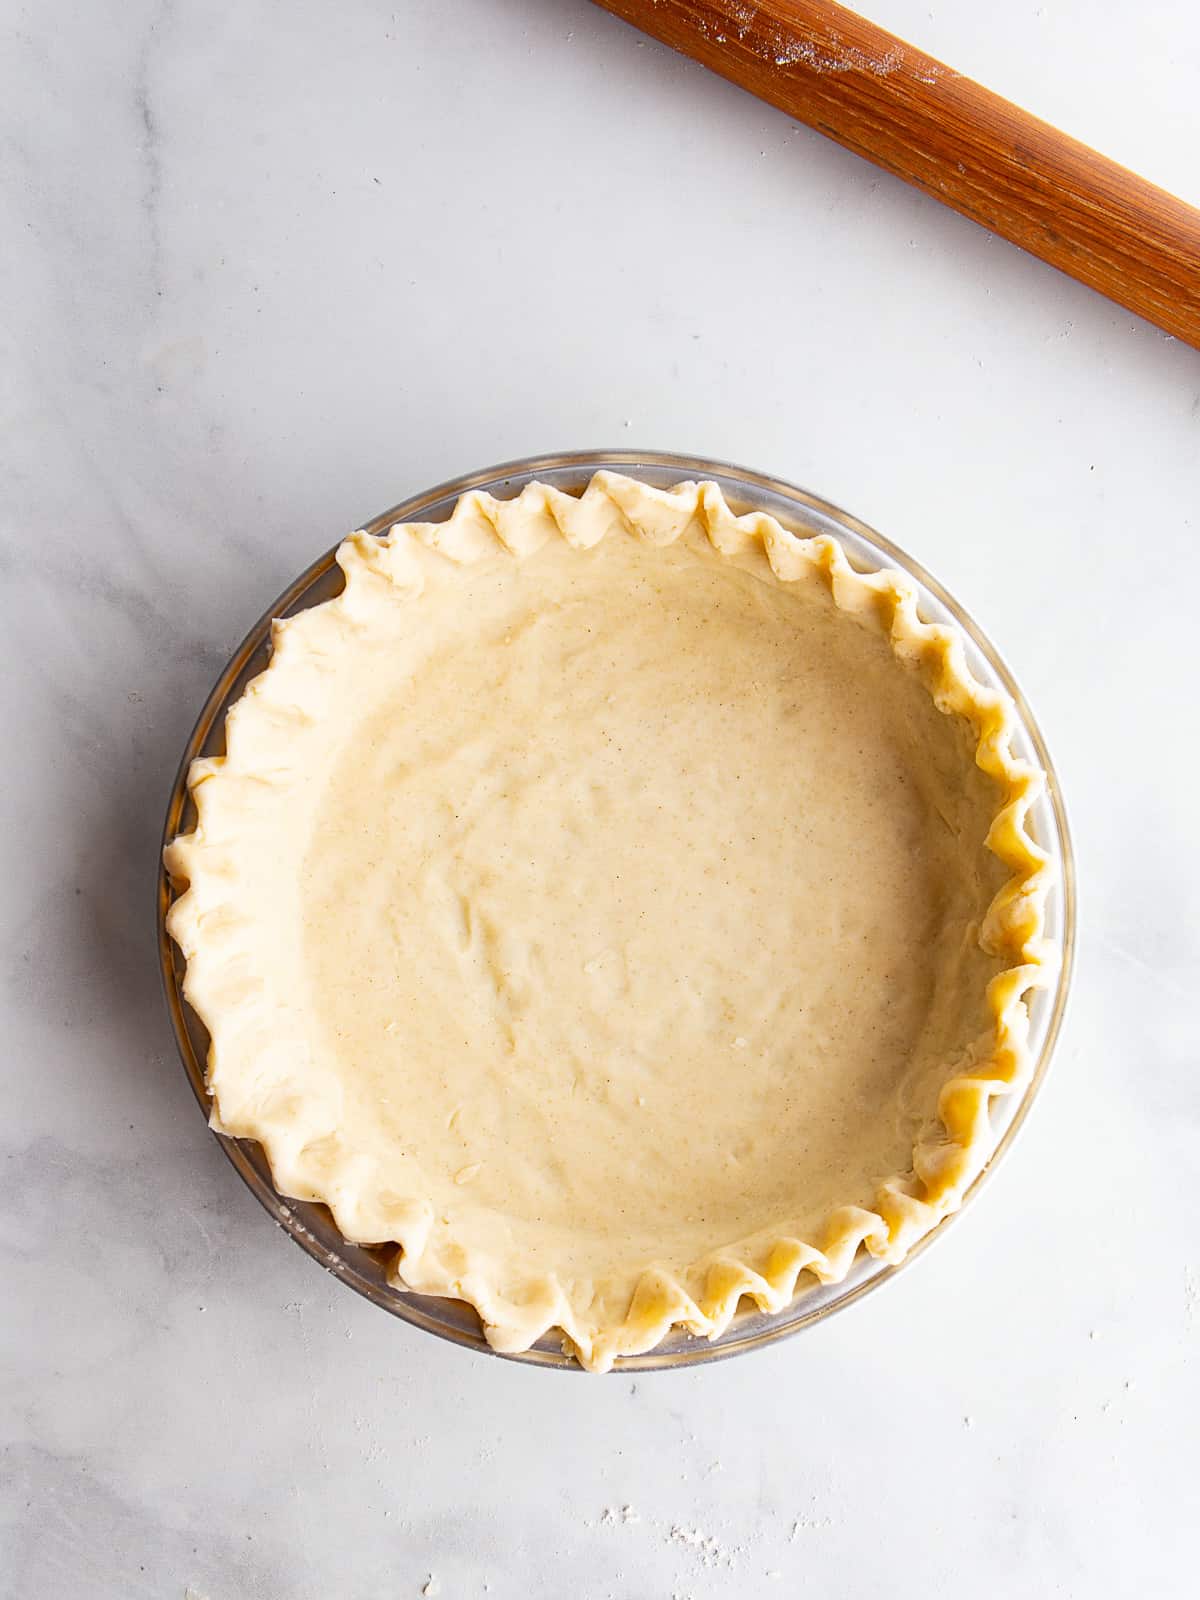 Unbaked gluten-free pie crust in a pan.